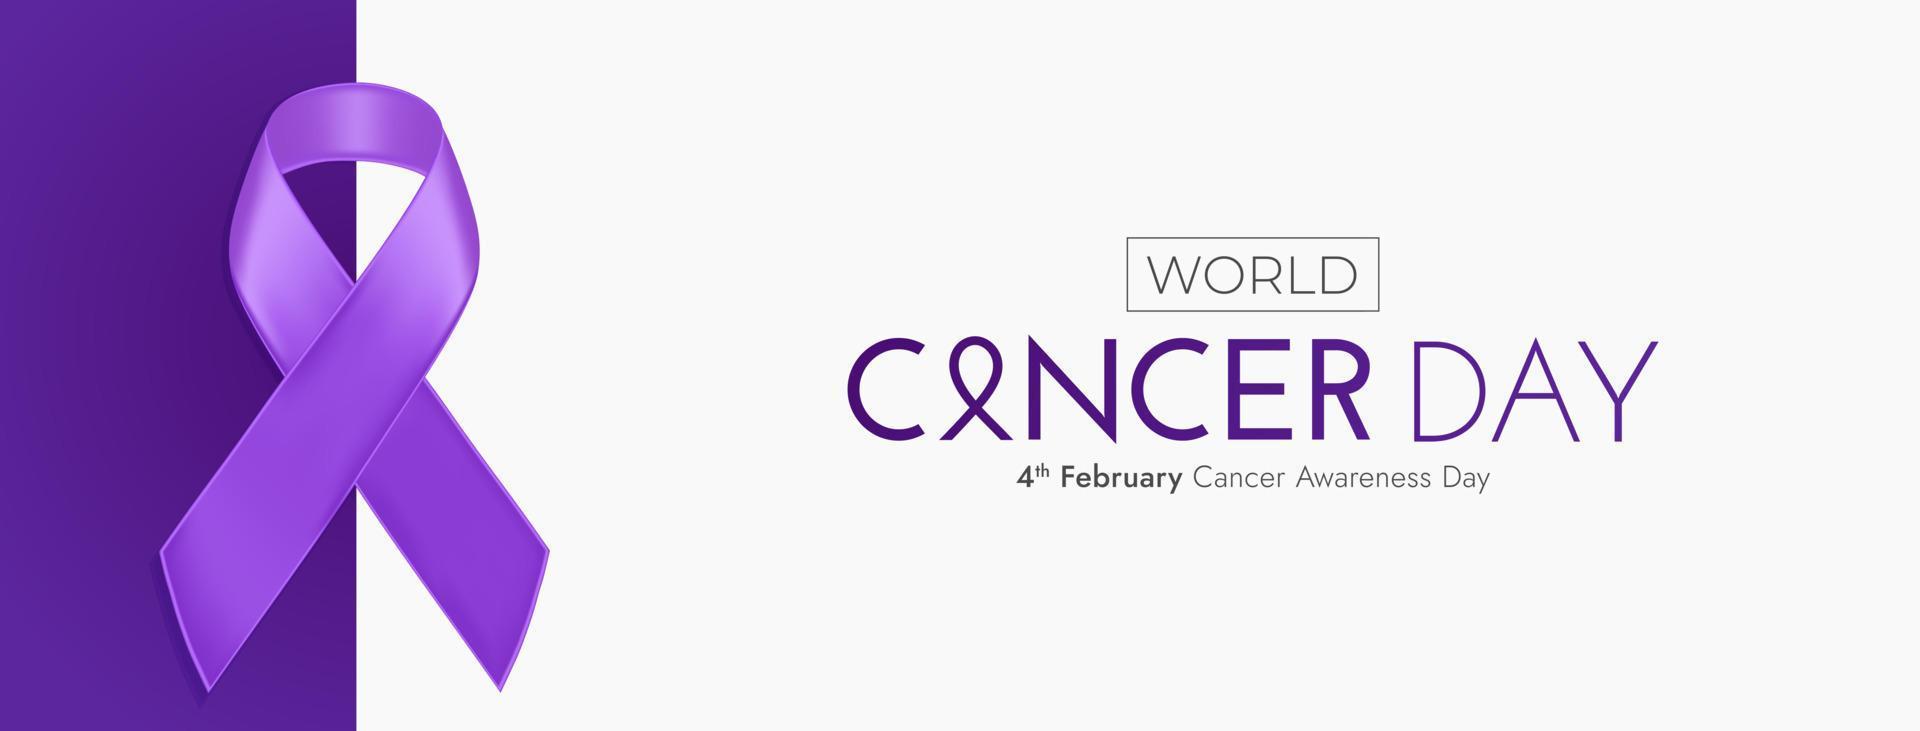 World Cancer Day 4th February Social Media Post vector